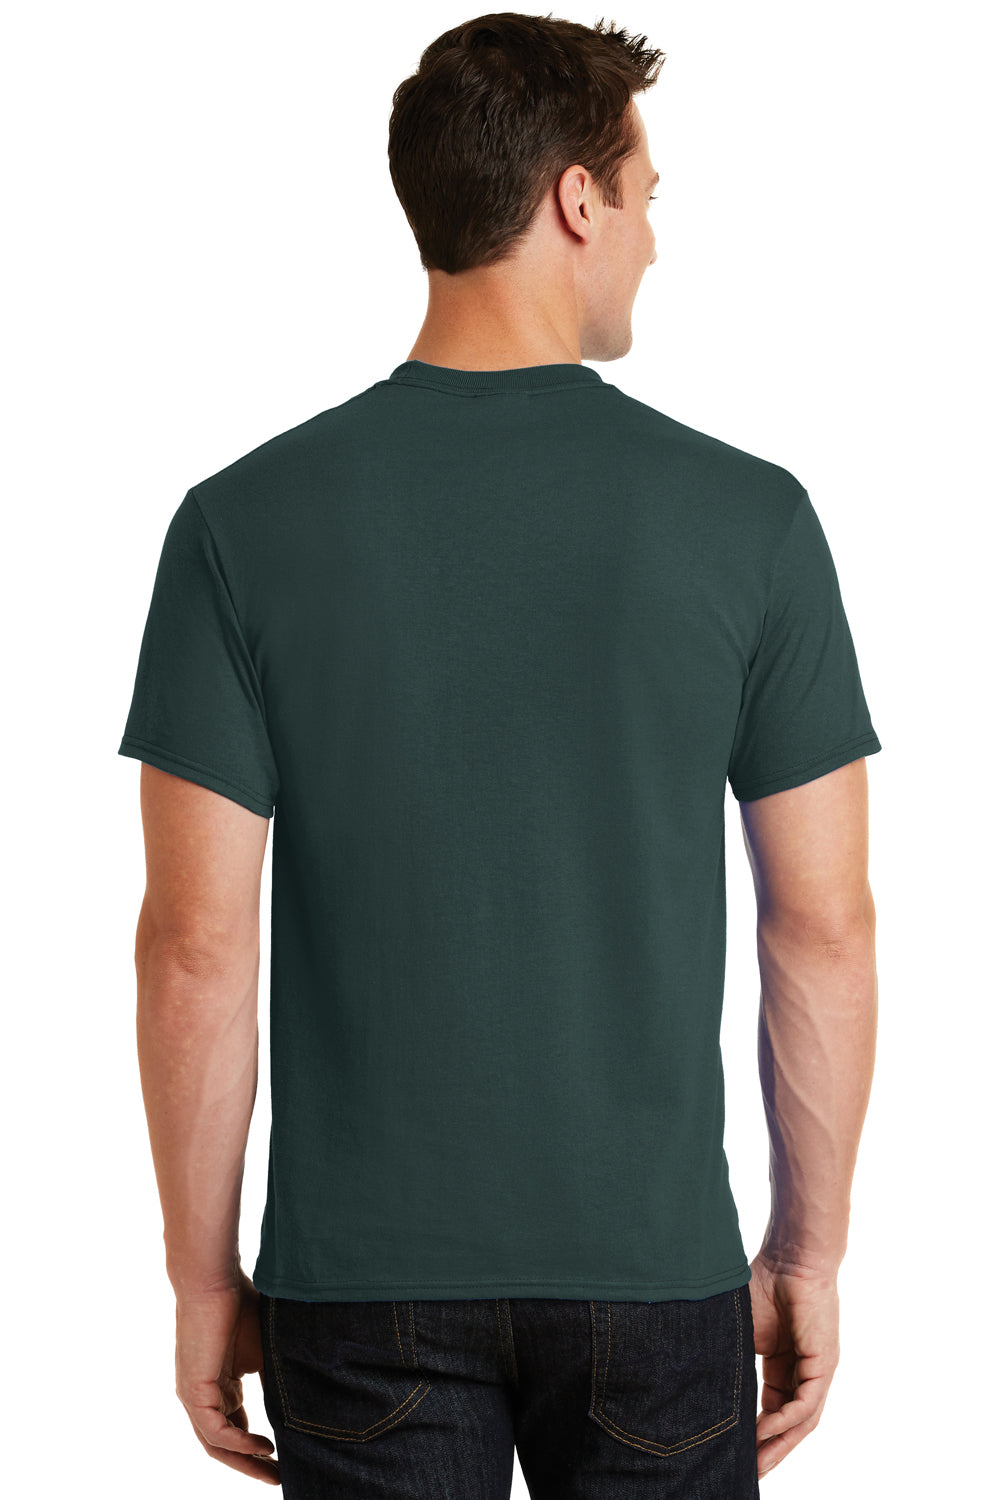 Port & Company PC55 Mens Core Short Sleeve Crewneck T-Shirt Dark Green Back